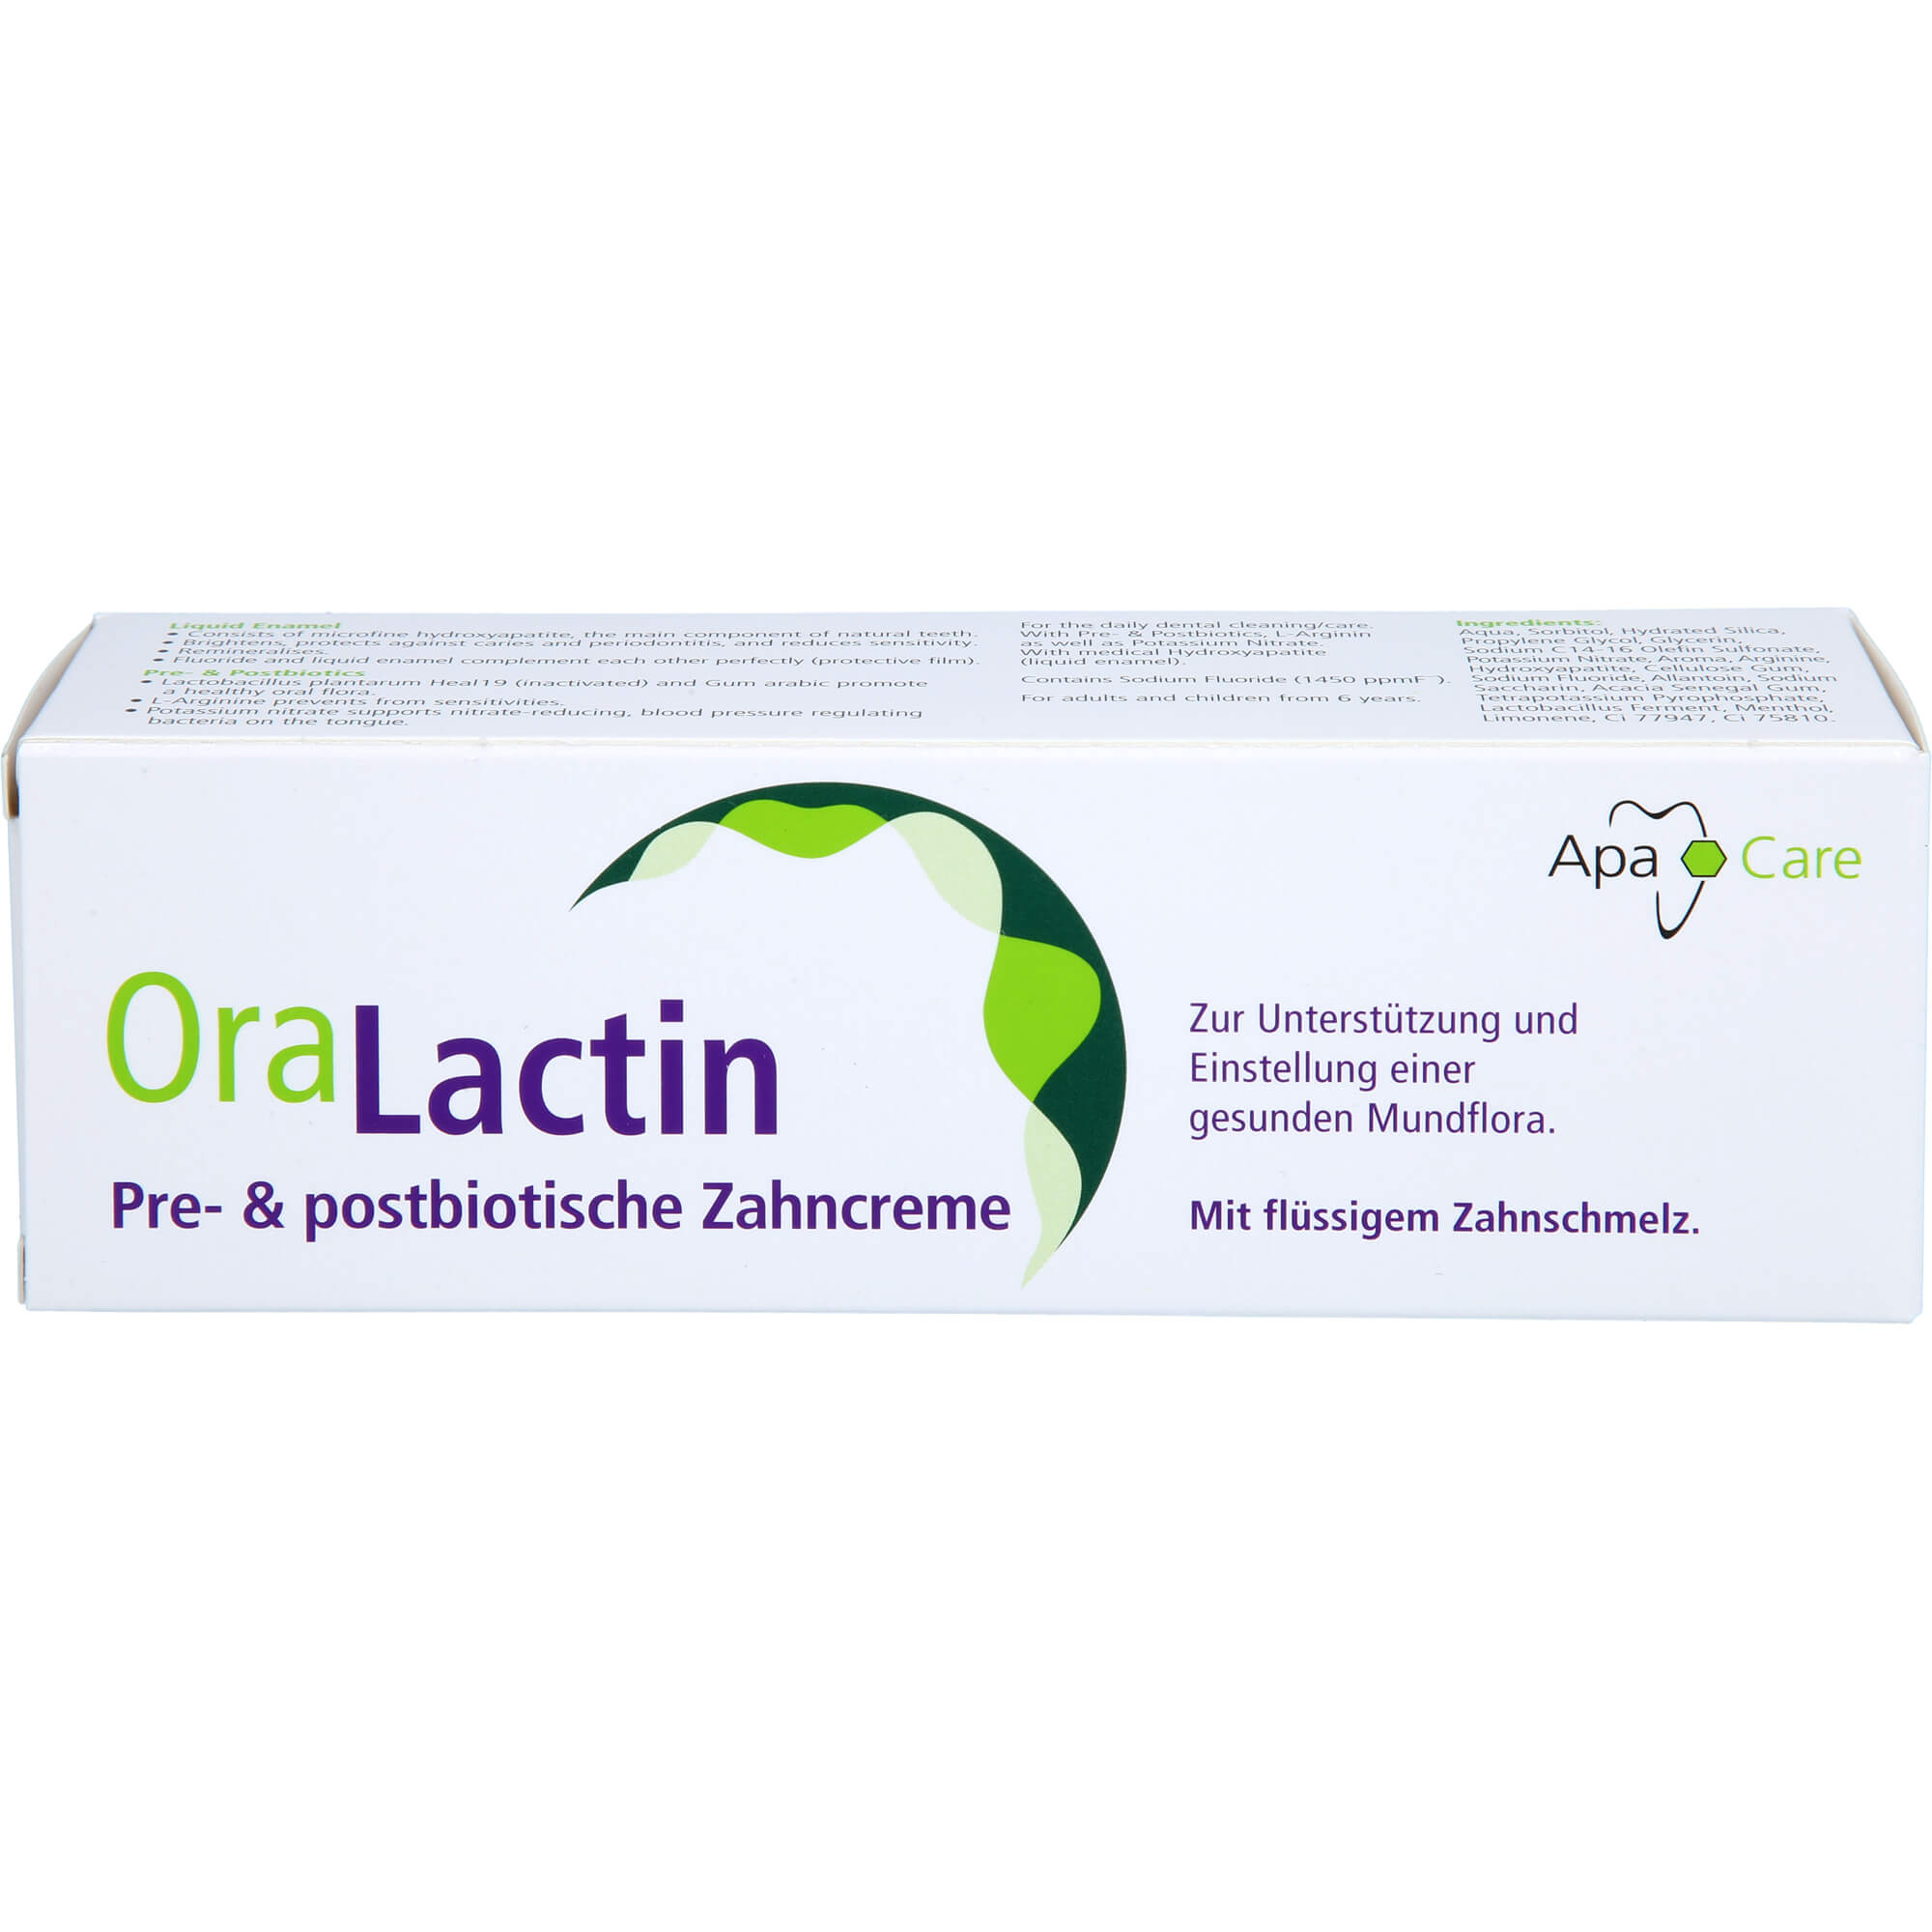 ORALACTIN pre- & postbiotische Zahncreme